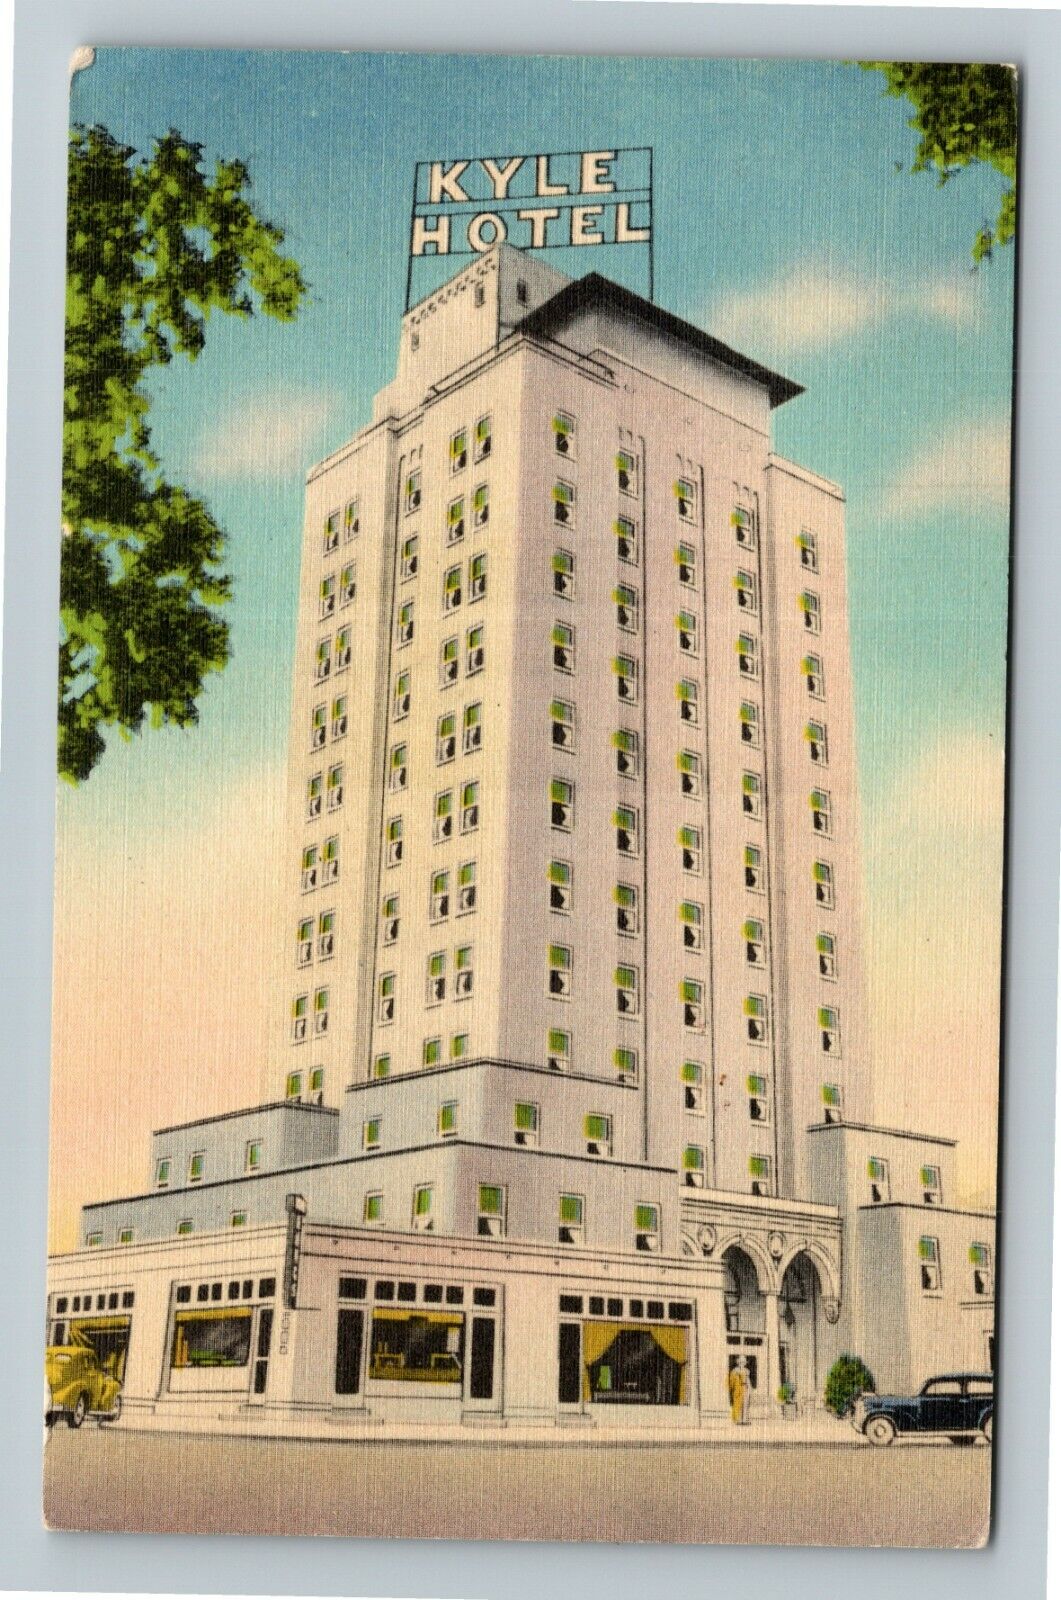 Temple TX-Texas, Kyle Hotel, Aerial Exterior, Vintage Postcard